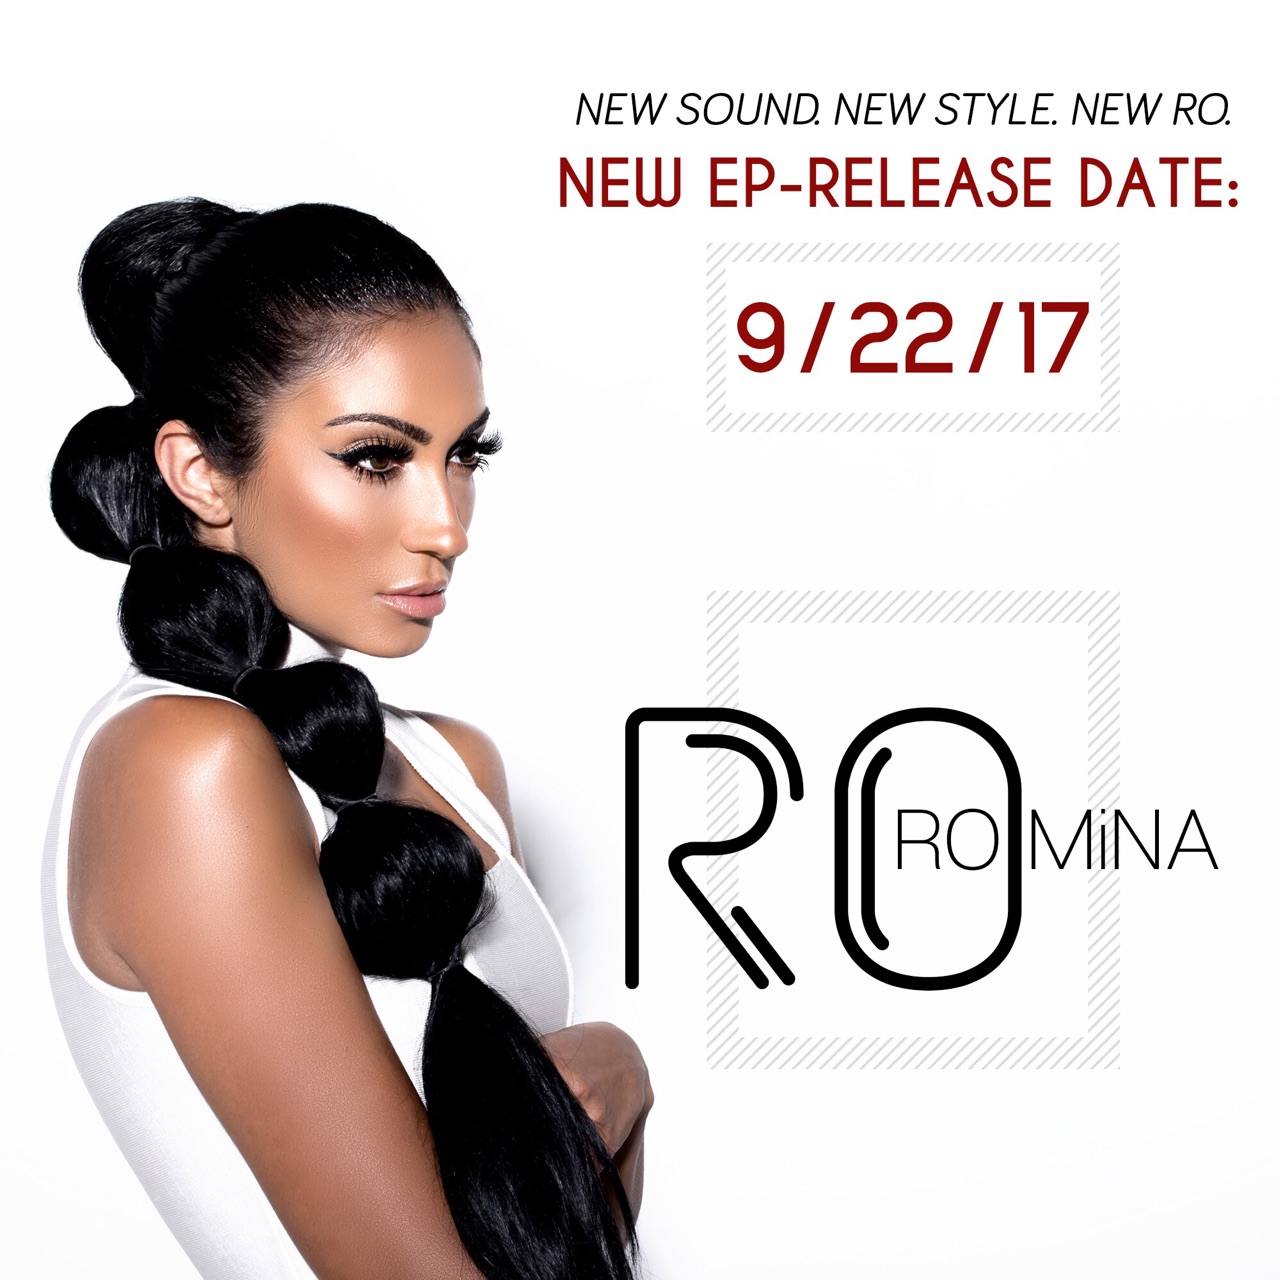 Tomorrow! New sound. New Style. New RO.